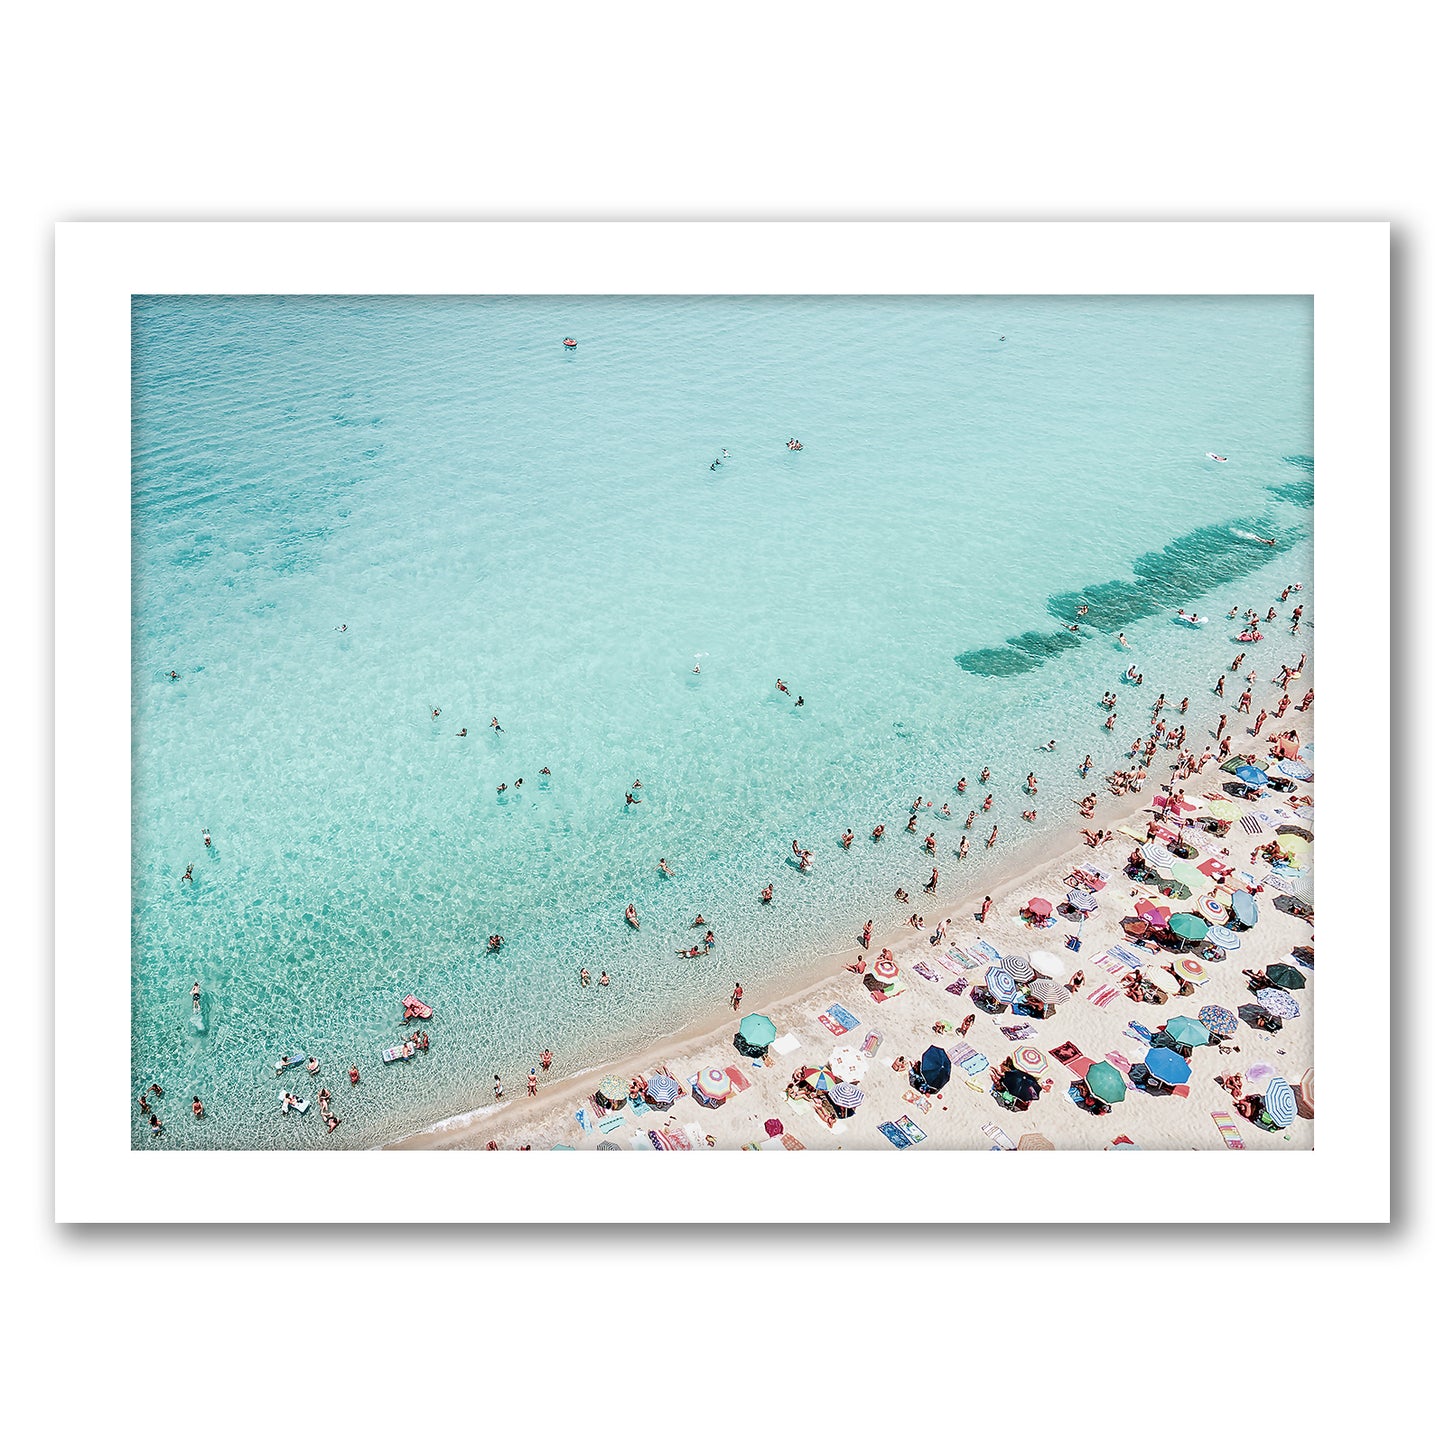 Ocean and Beach Photography - 6 Piece Framed Gallery Wall Set - Art Set - Americanflat